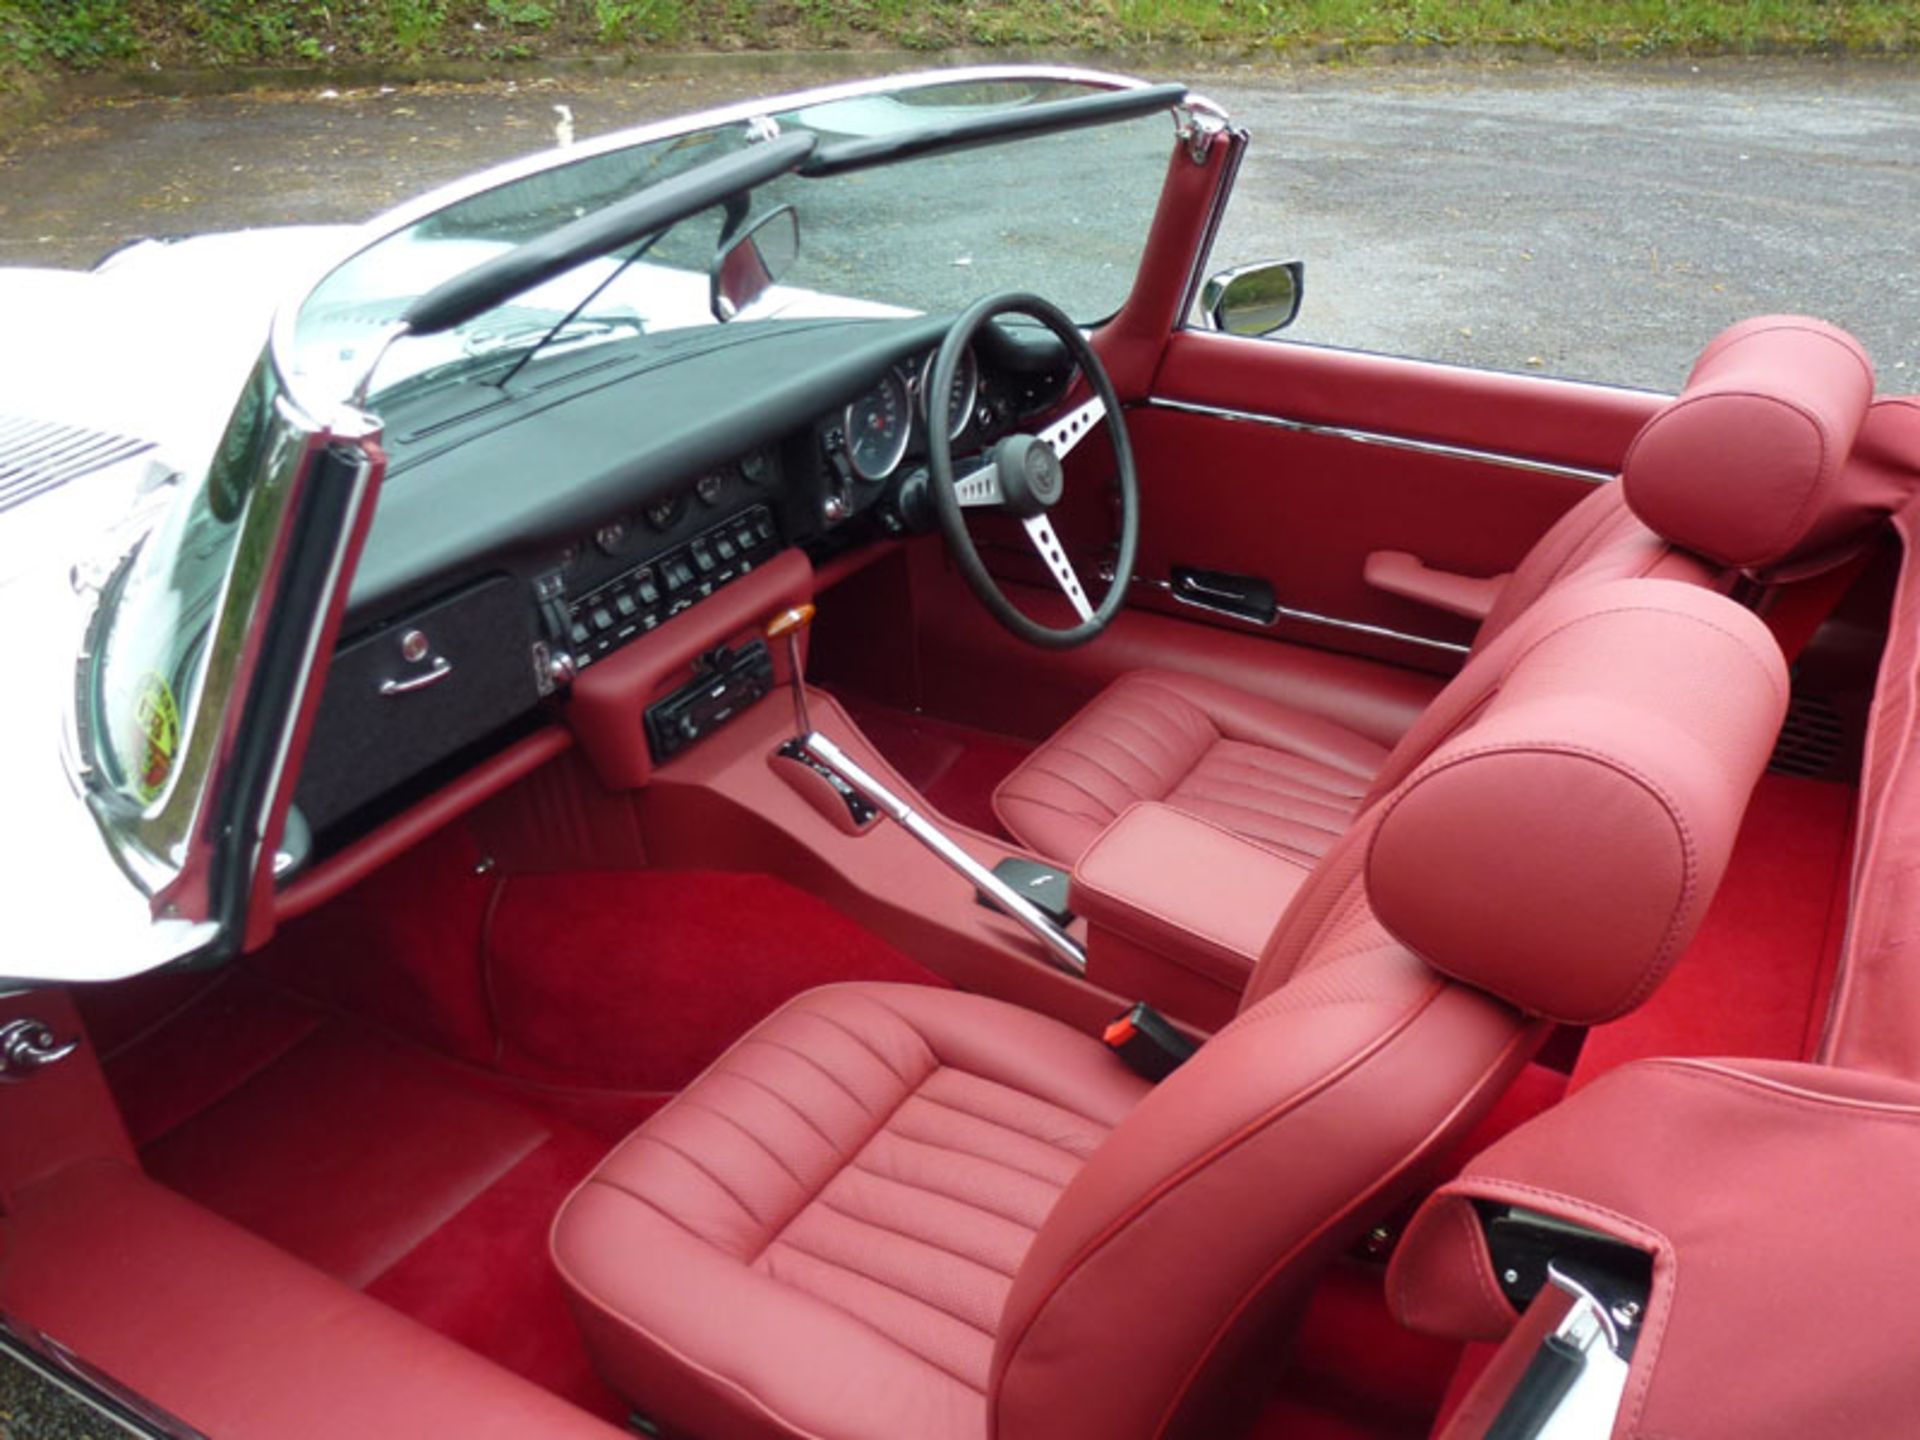 1974 Jaguar E-Type V12 Roadster - Image 6 of 13